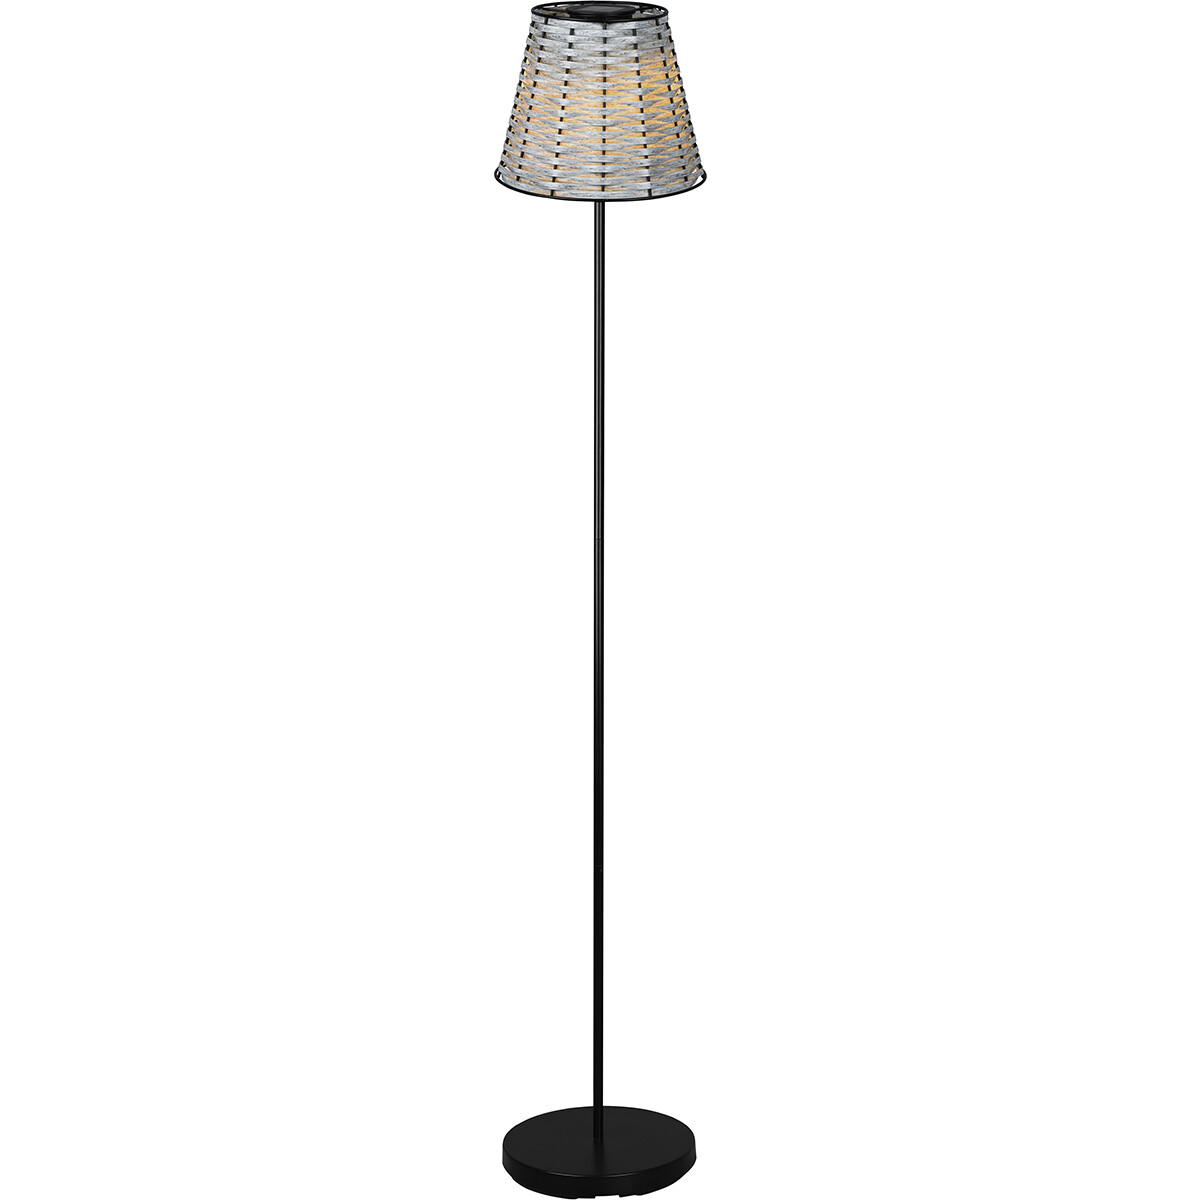 LED Tafellamp met Zonne-energie - Trion Roza XL - Warm Wit 3000K - Dag en Nacht Sensor - Spatwaterdi